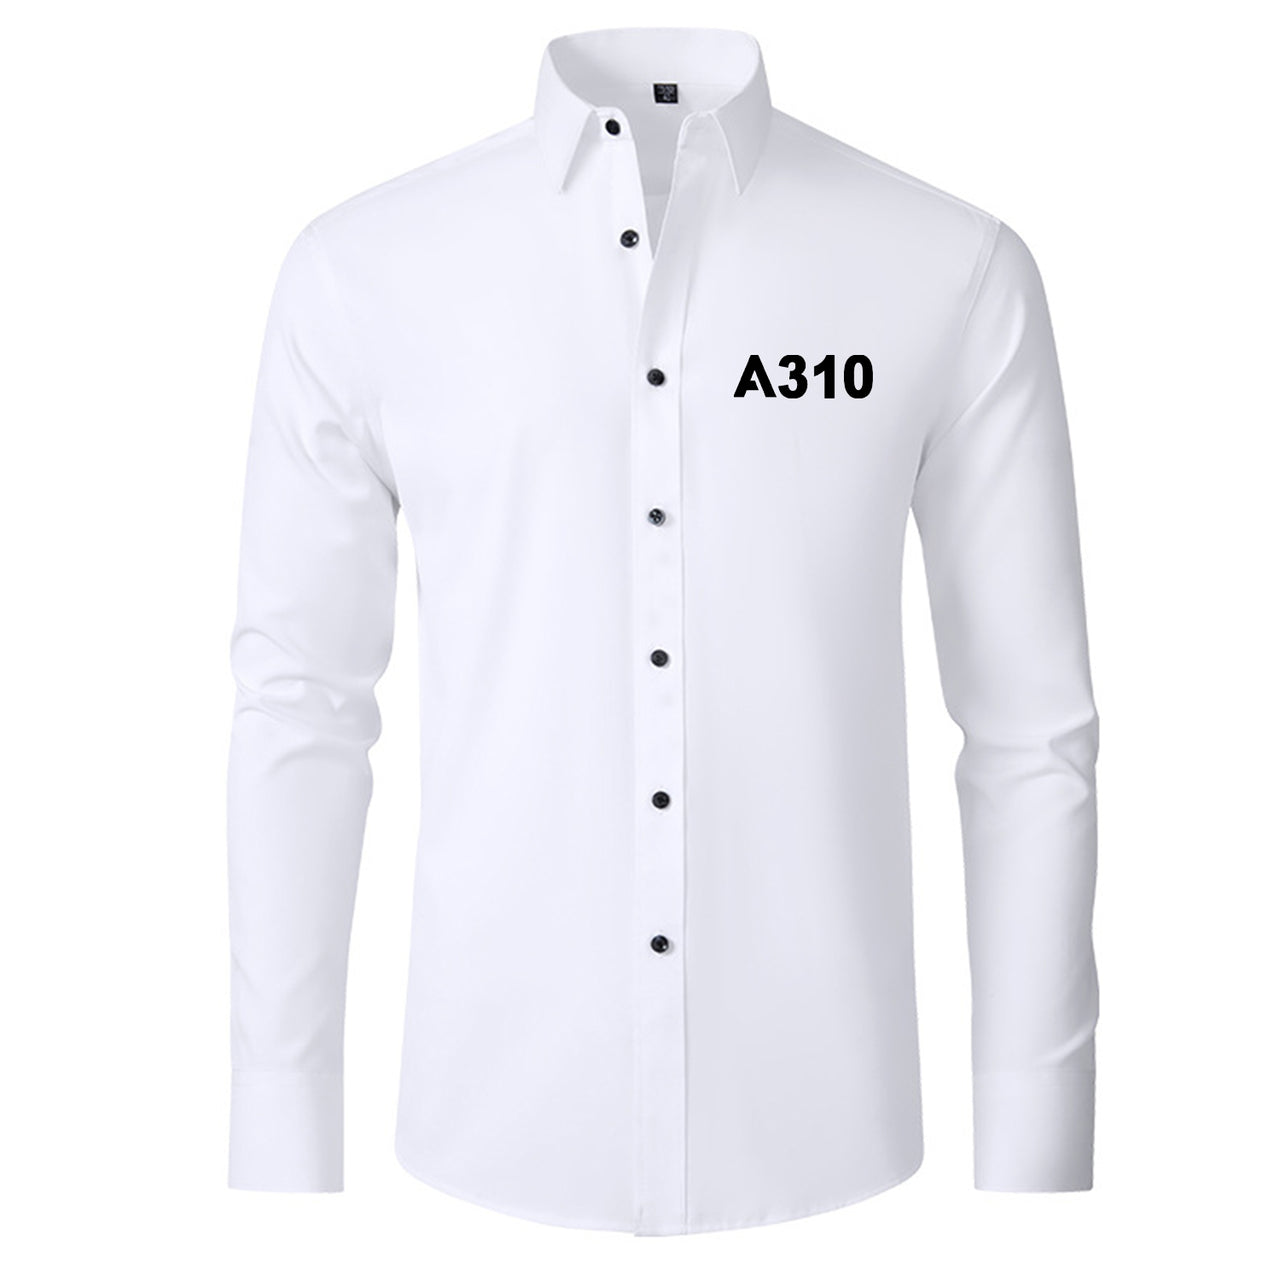 A310 Flat Text Designed Long Sleeve Shirts